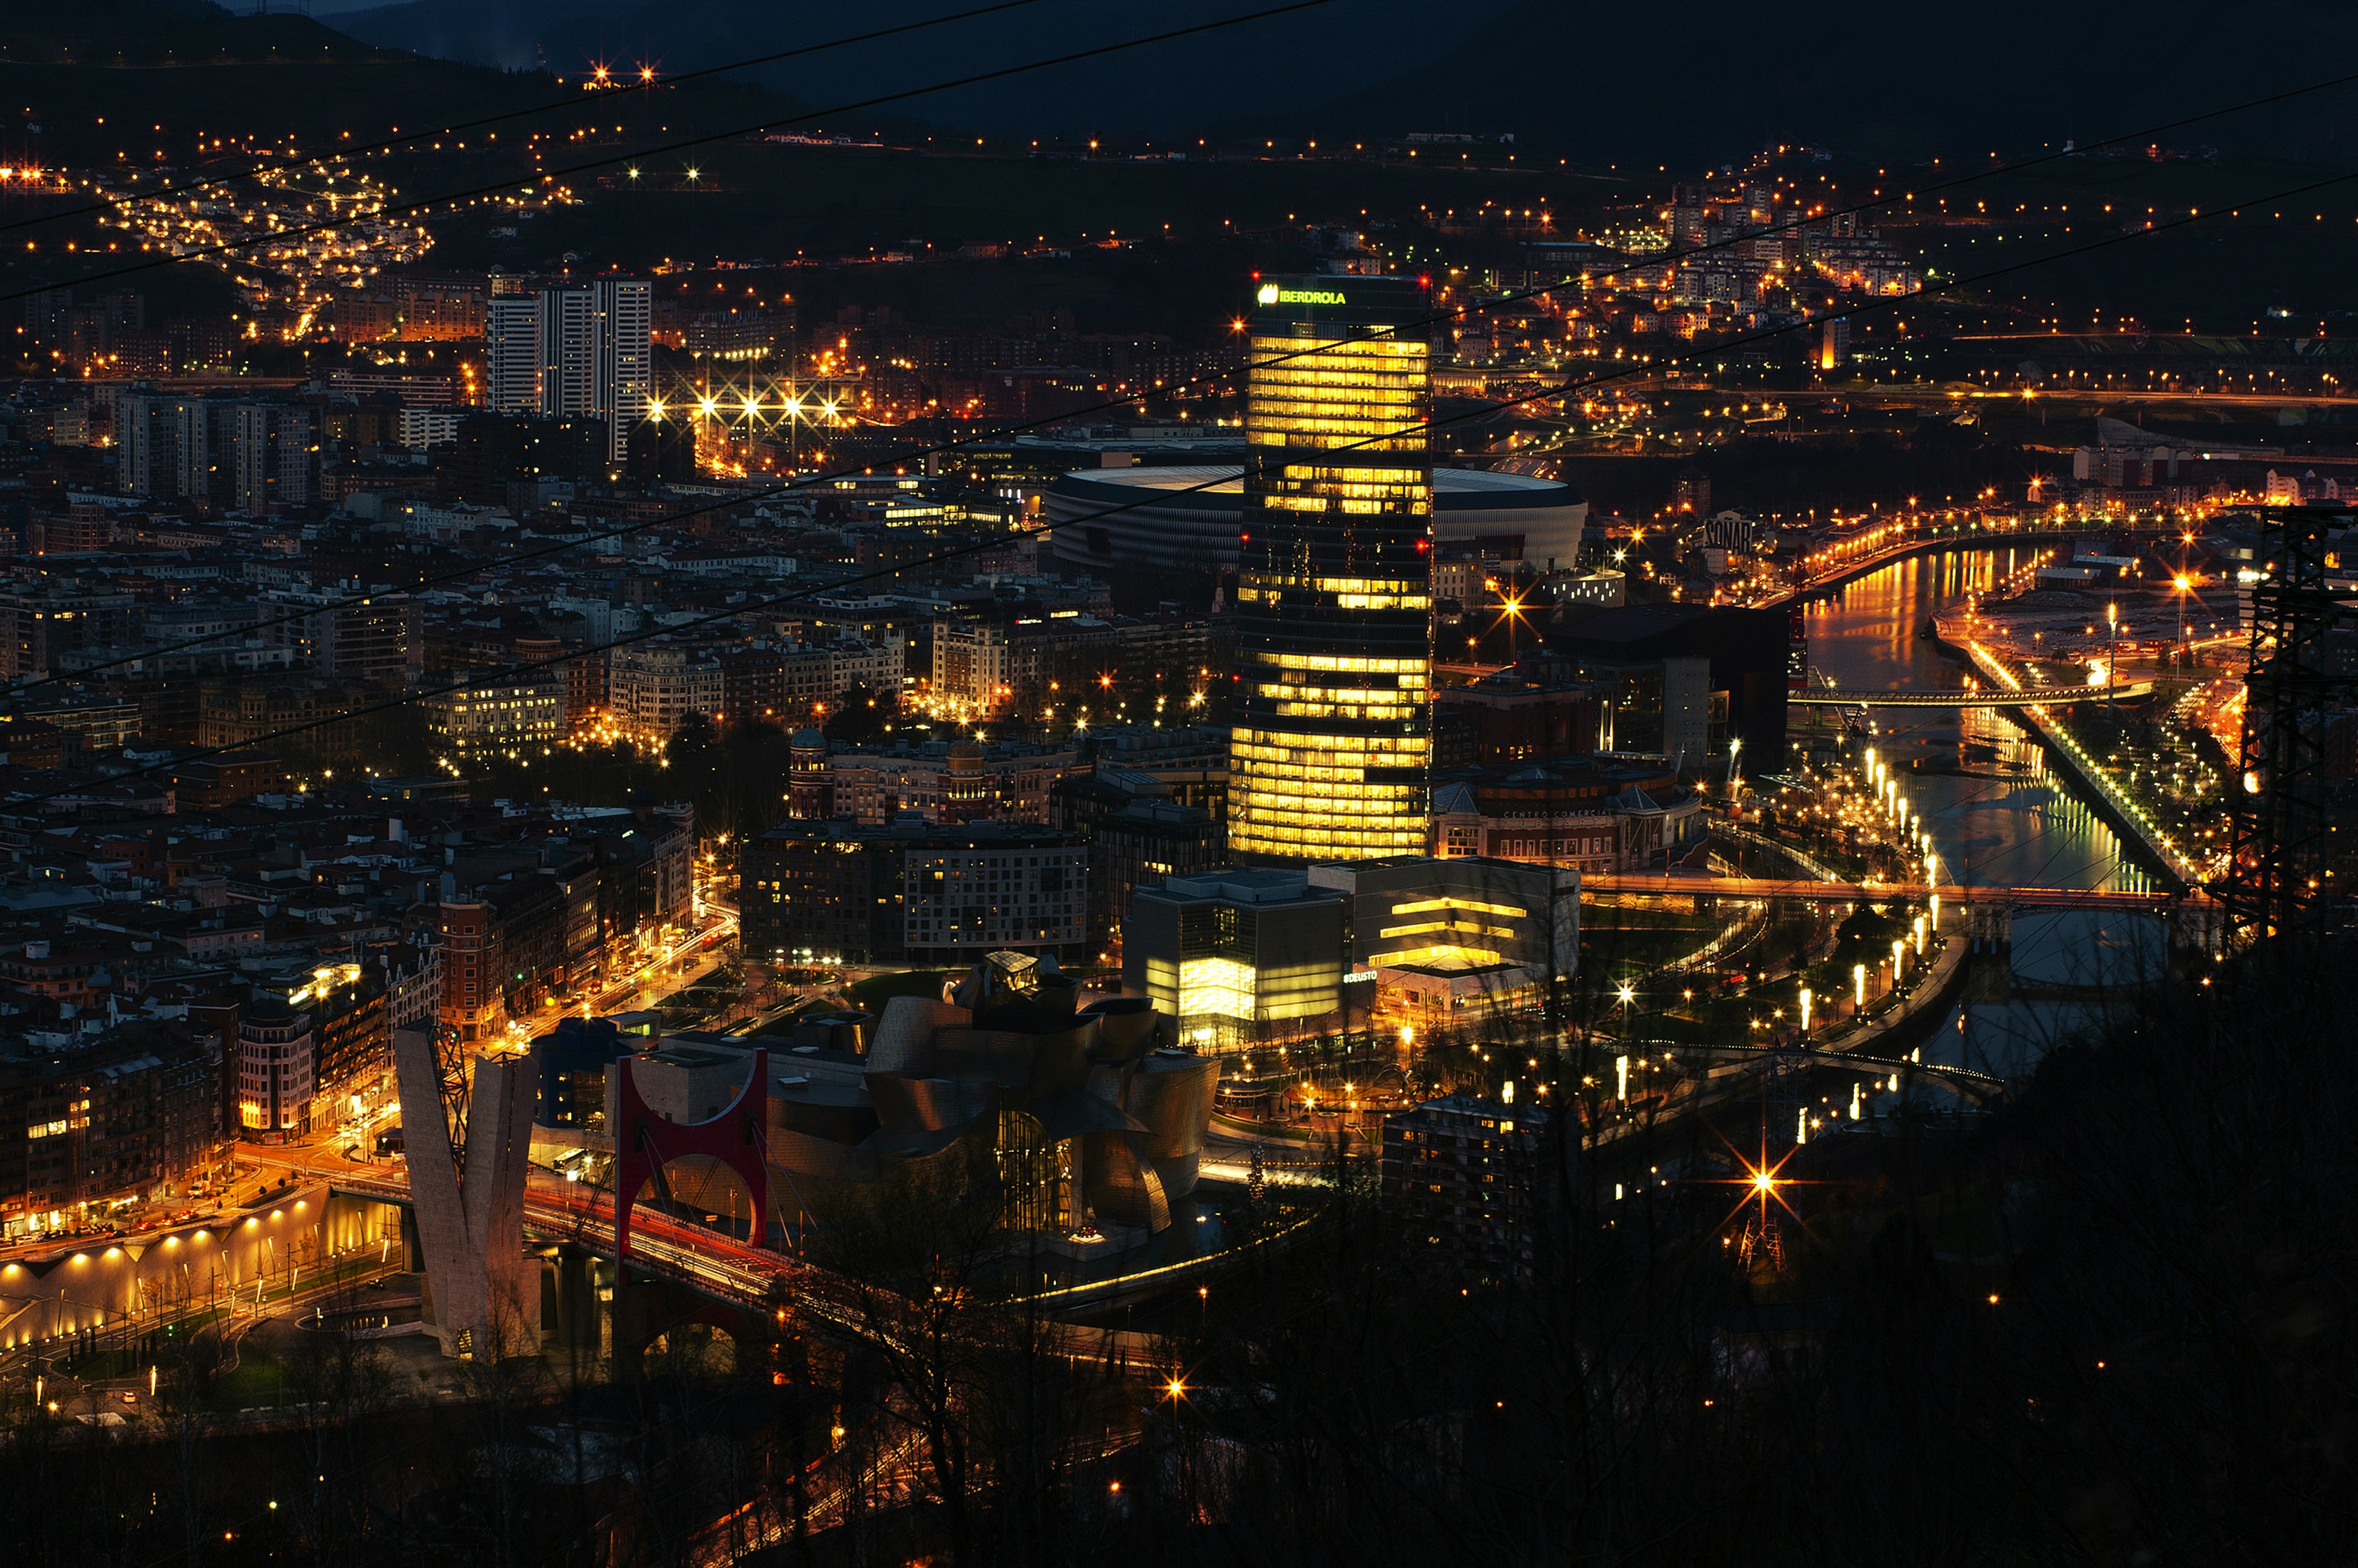 Just taken before dawn in Bilbao